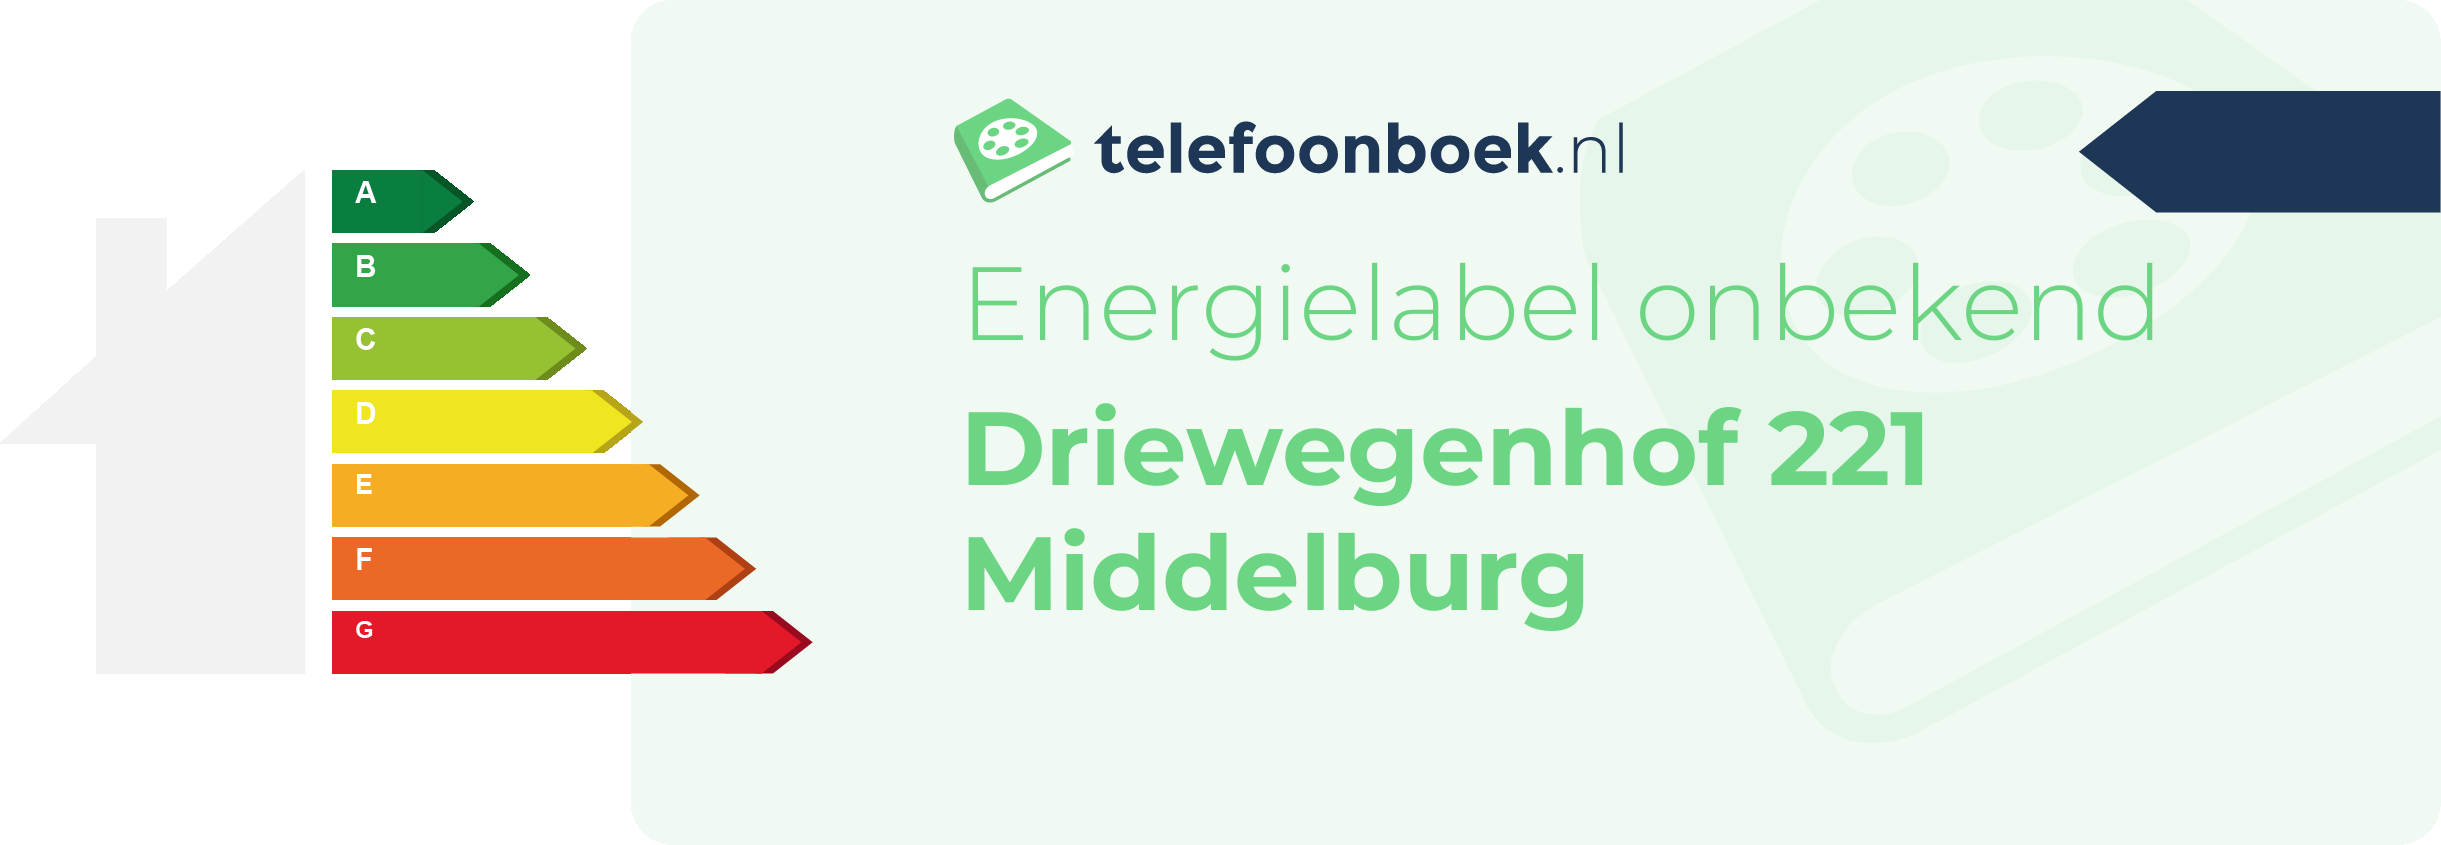 Energielabel Driewegenhof 221 Middelburg